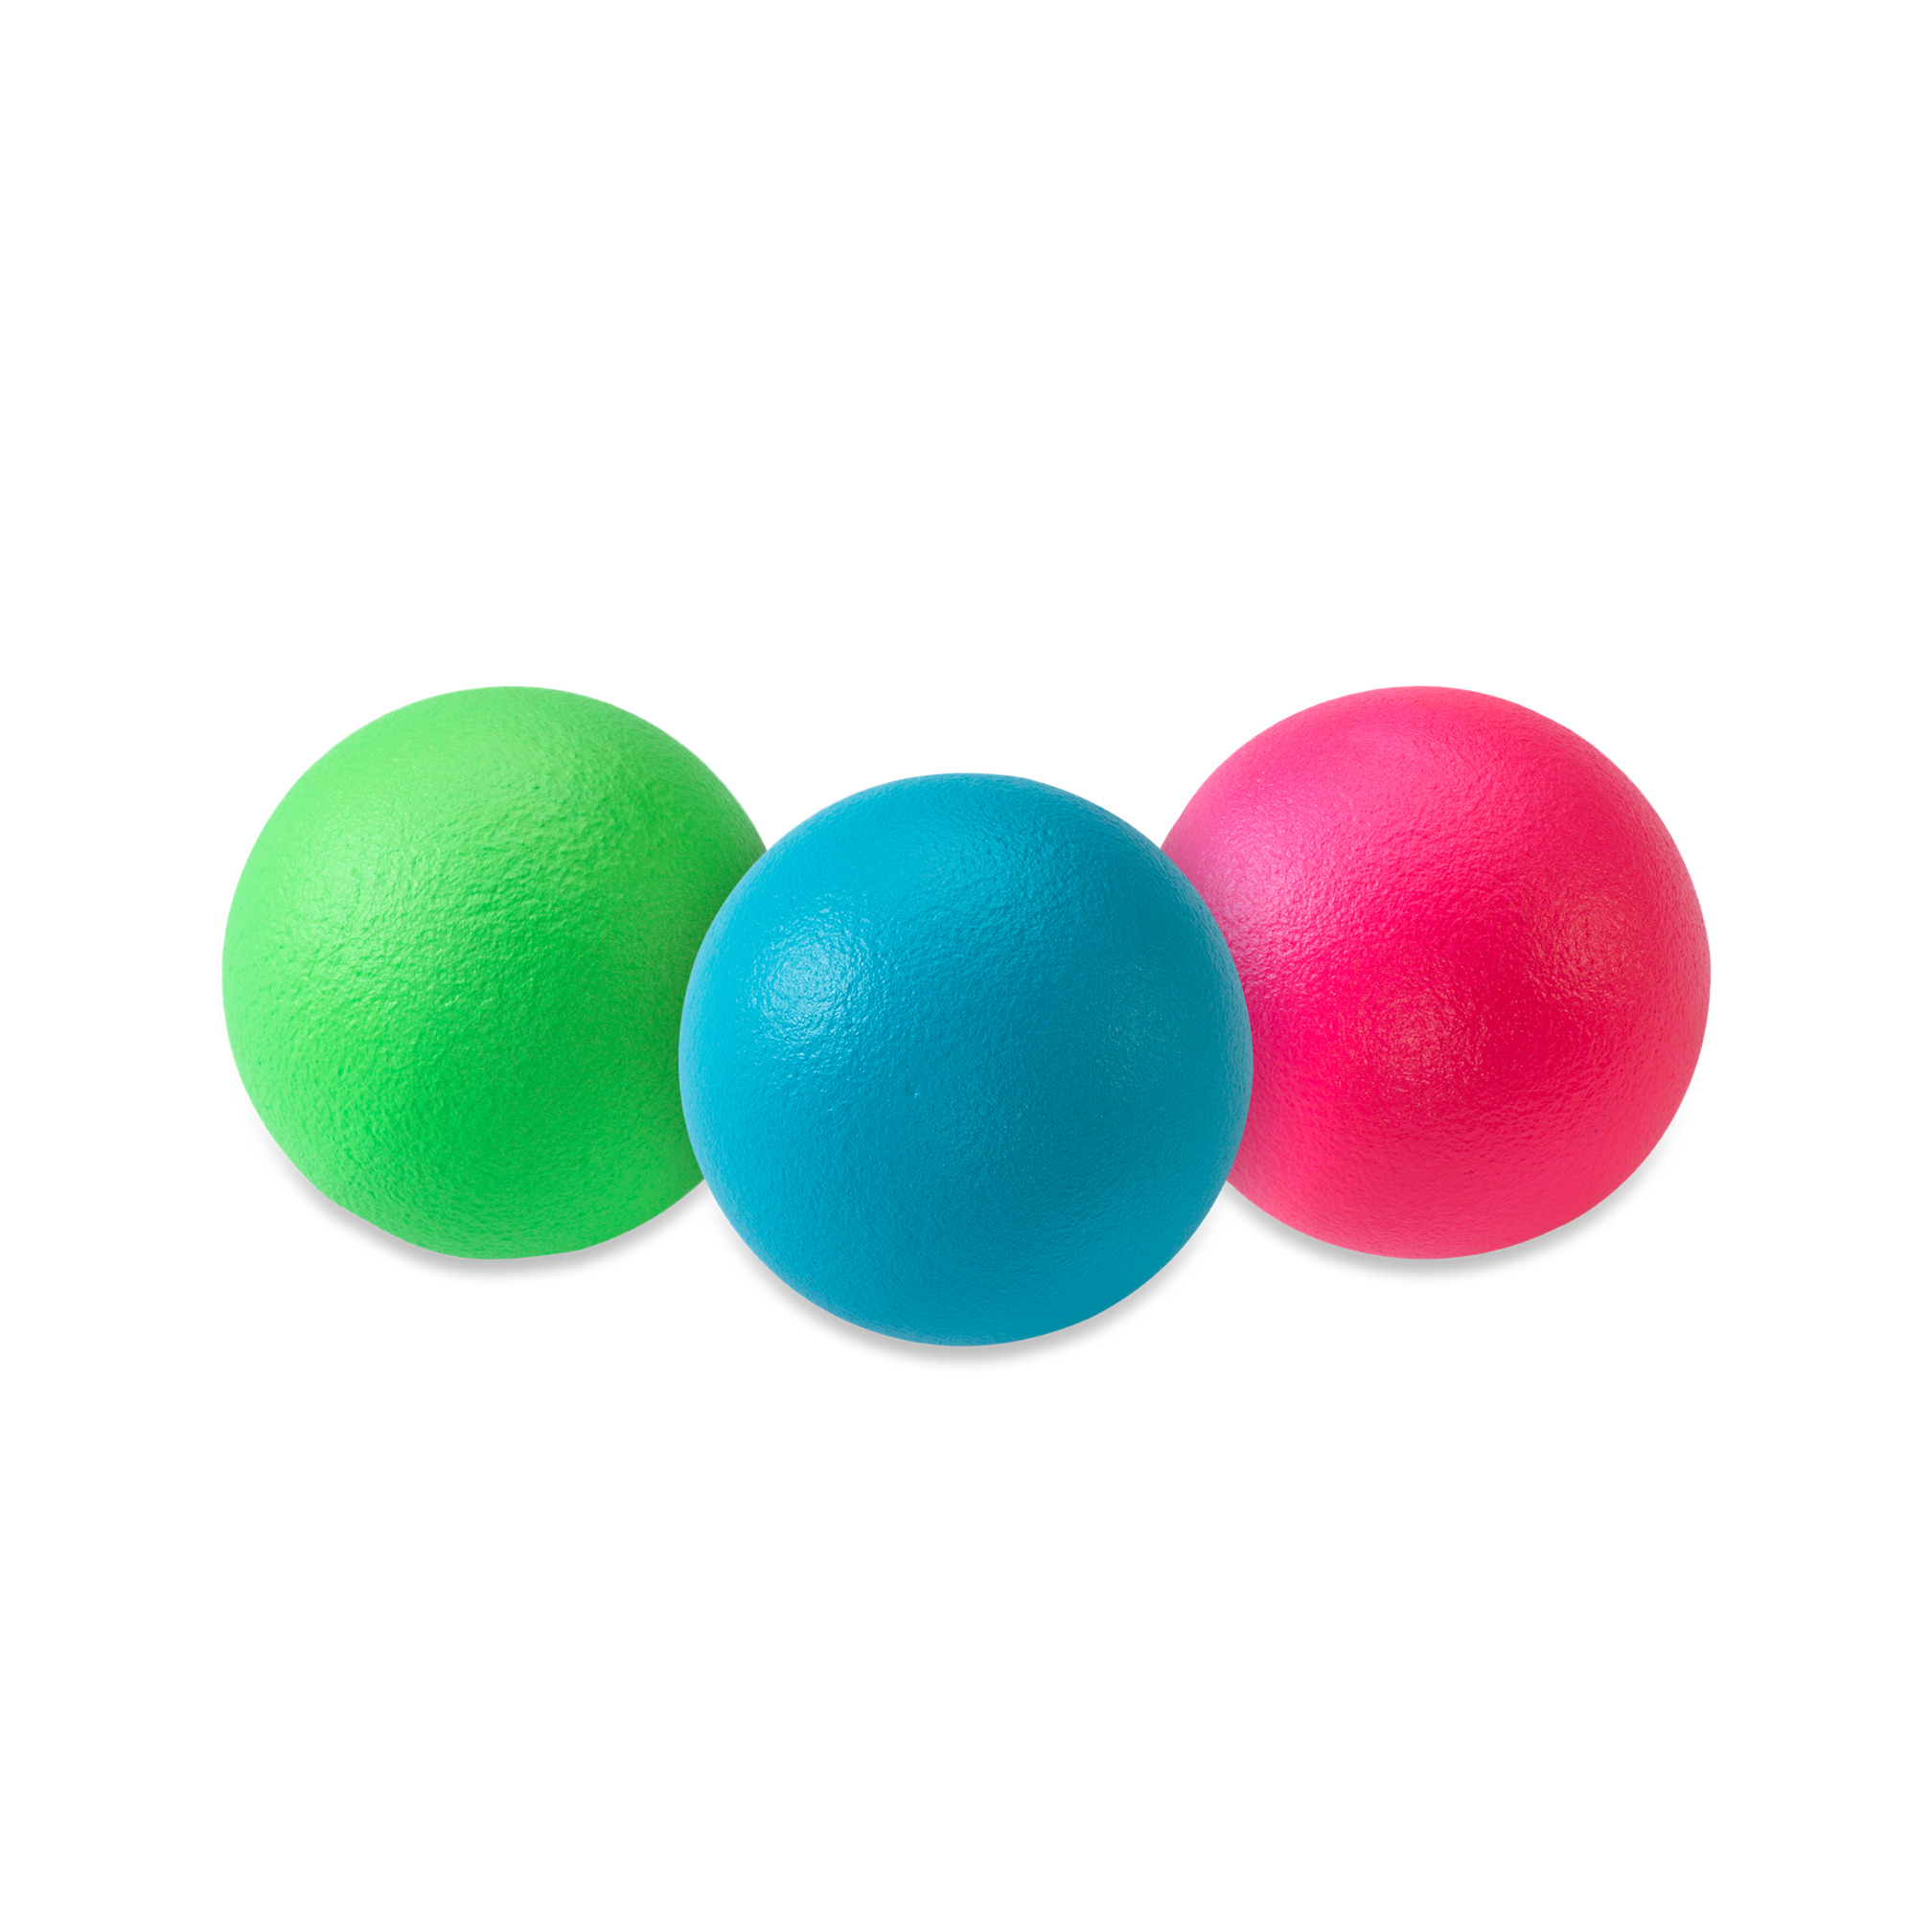 Foam ball, ø 21 cm, neon blue